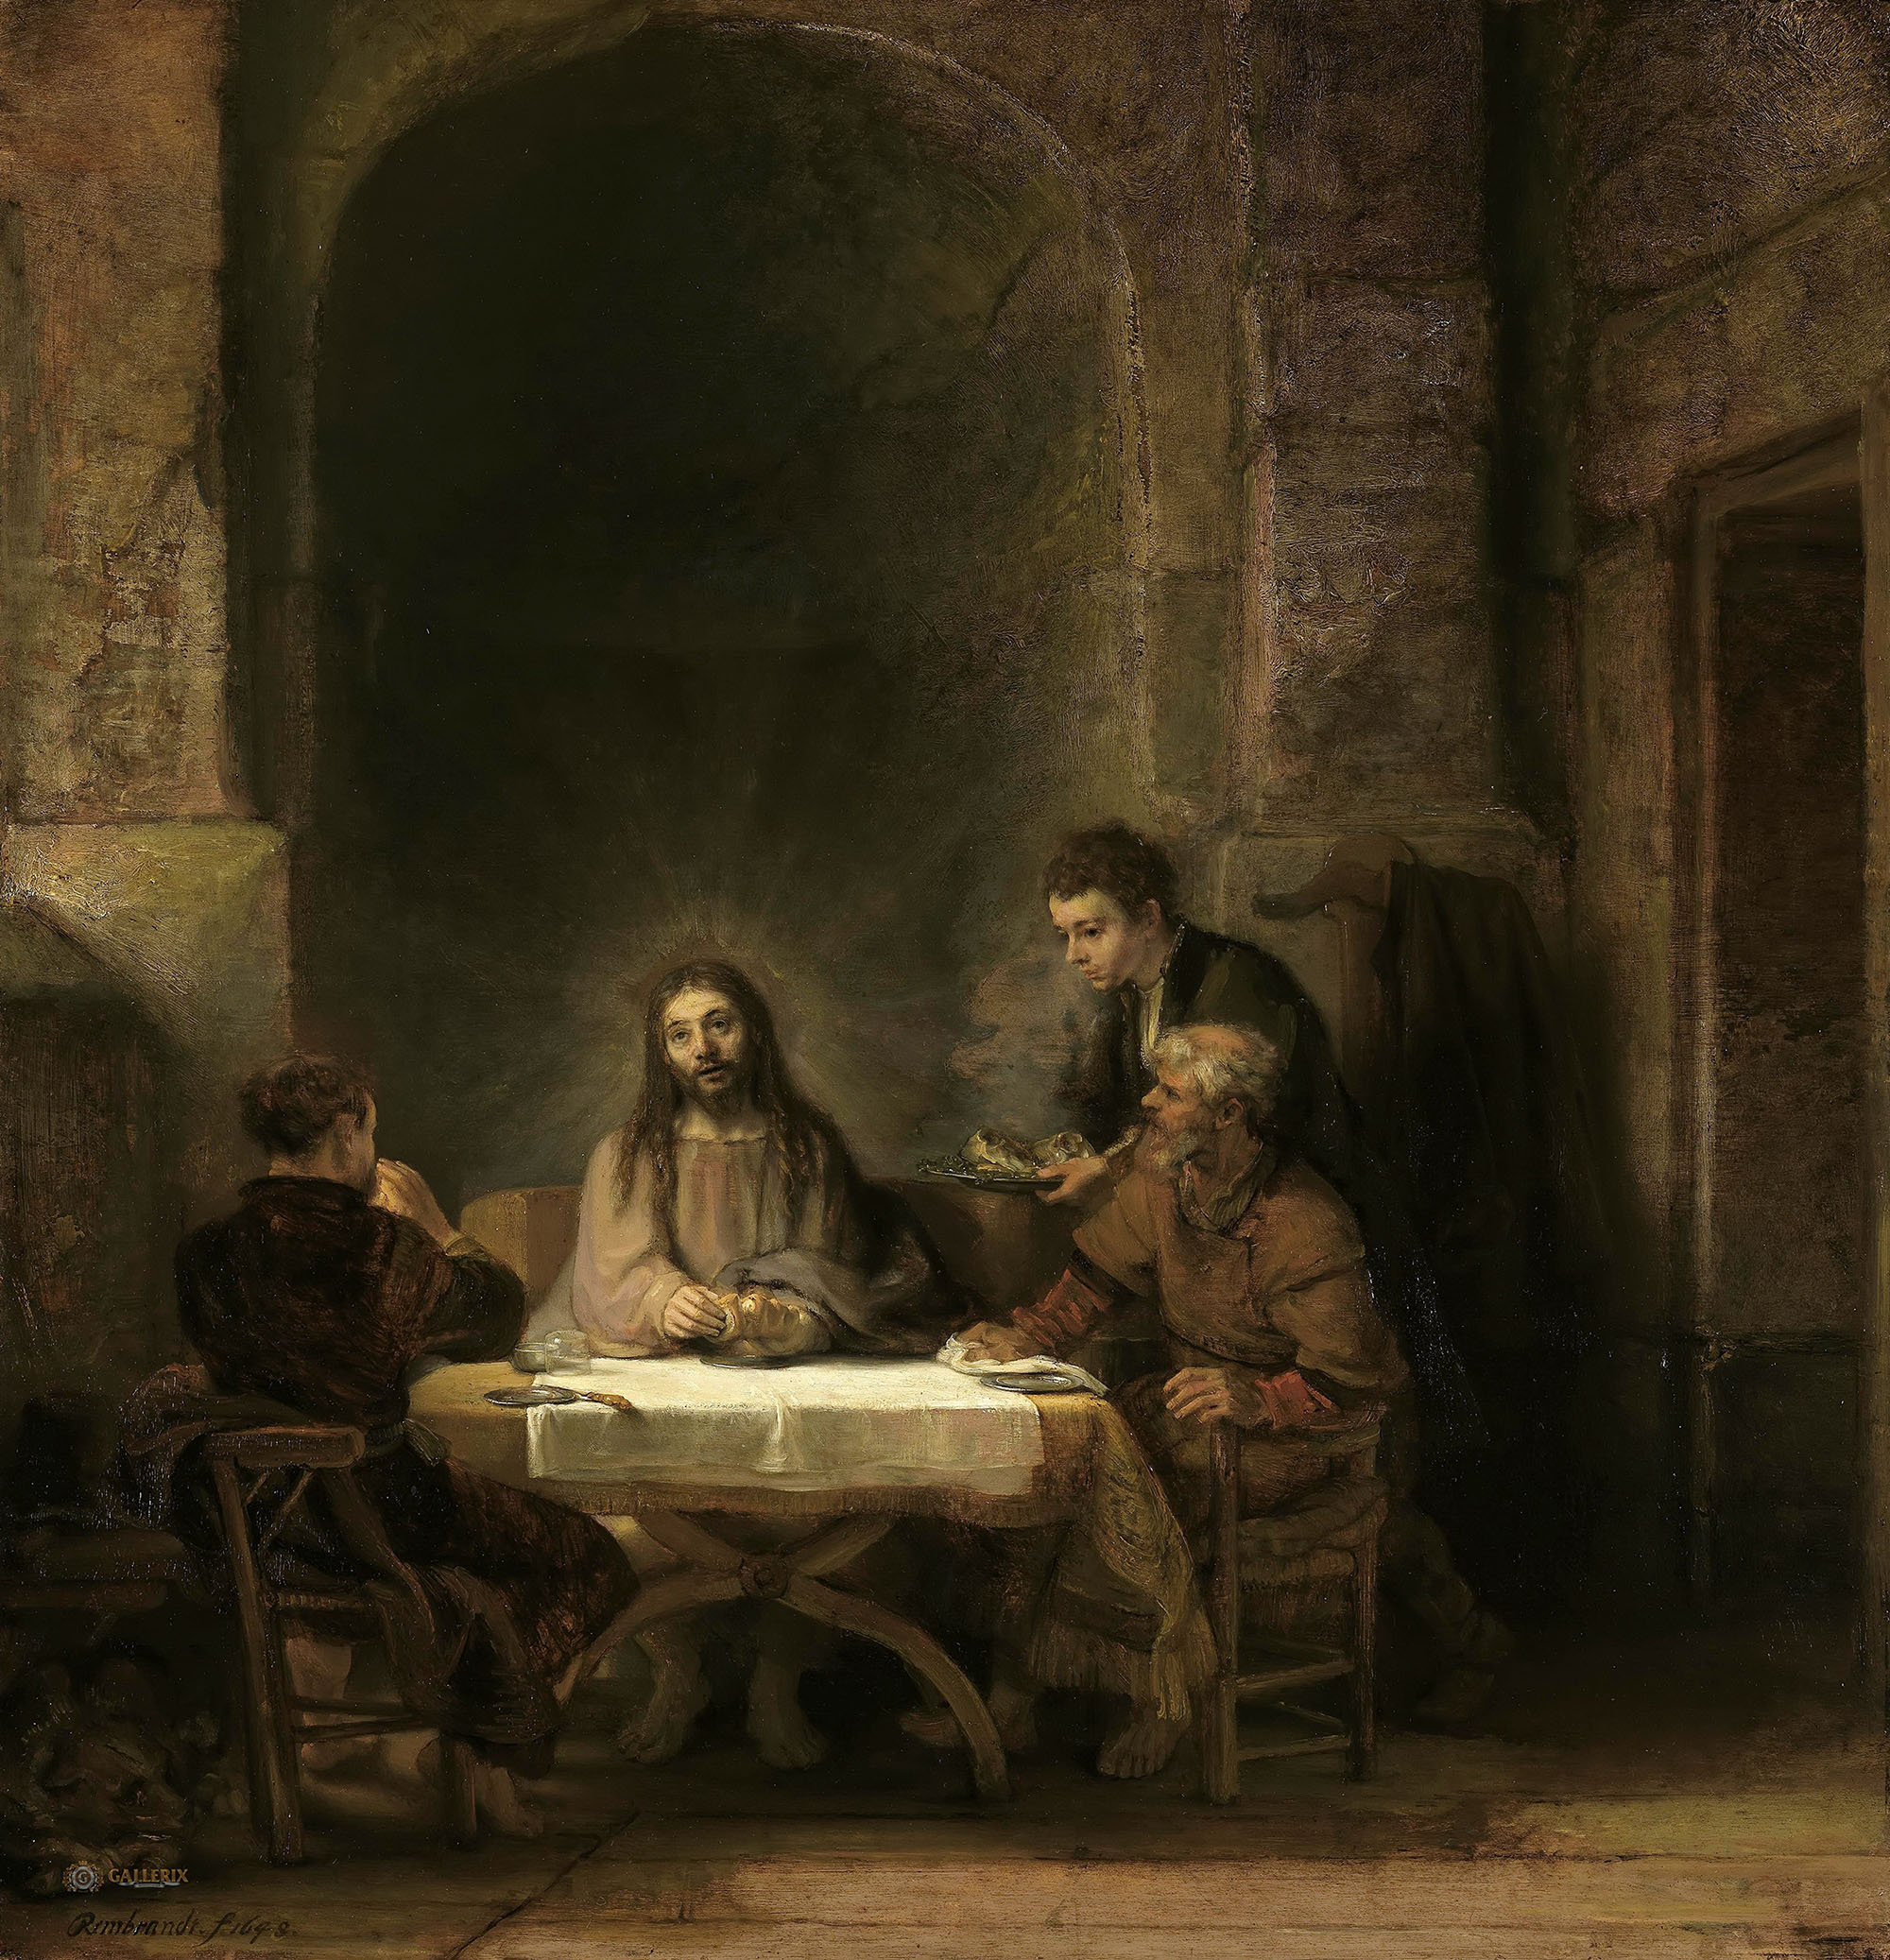 Рембрандт Харменс ван рейн. "Ужин в Эммаусе". 1648. Лувр, Париж.